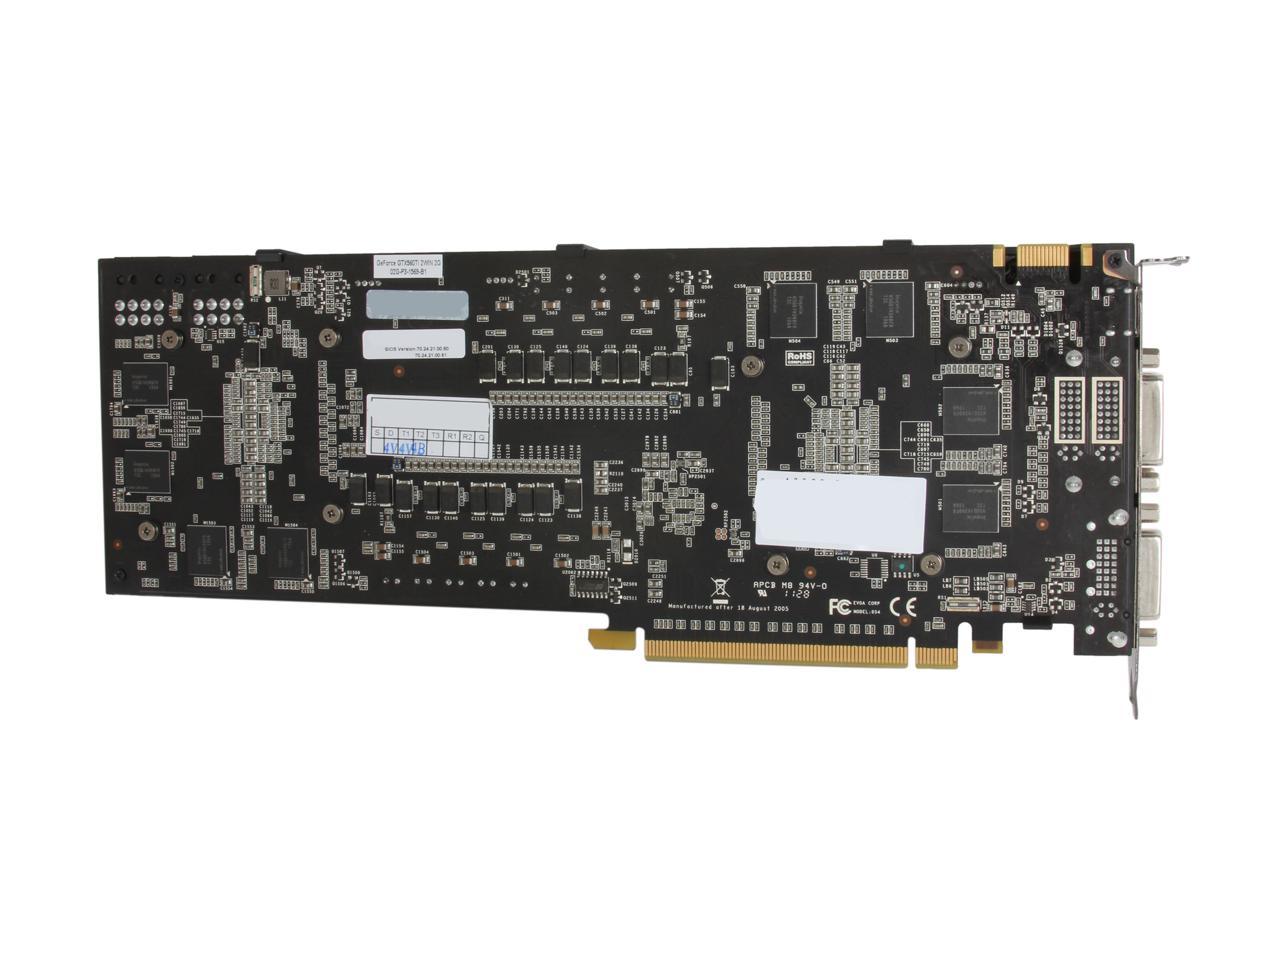 EVGA 02G-P3-1569-KR GeForce GTX 560 Ti 2Win (Fermi) 2GB 512-bit GDDR5 PCI Express 2.0 x16 HDCP Ready Video Card